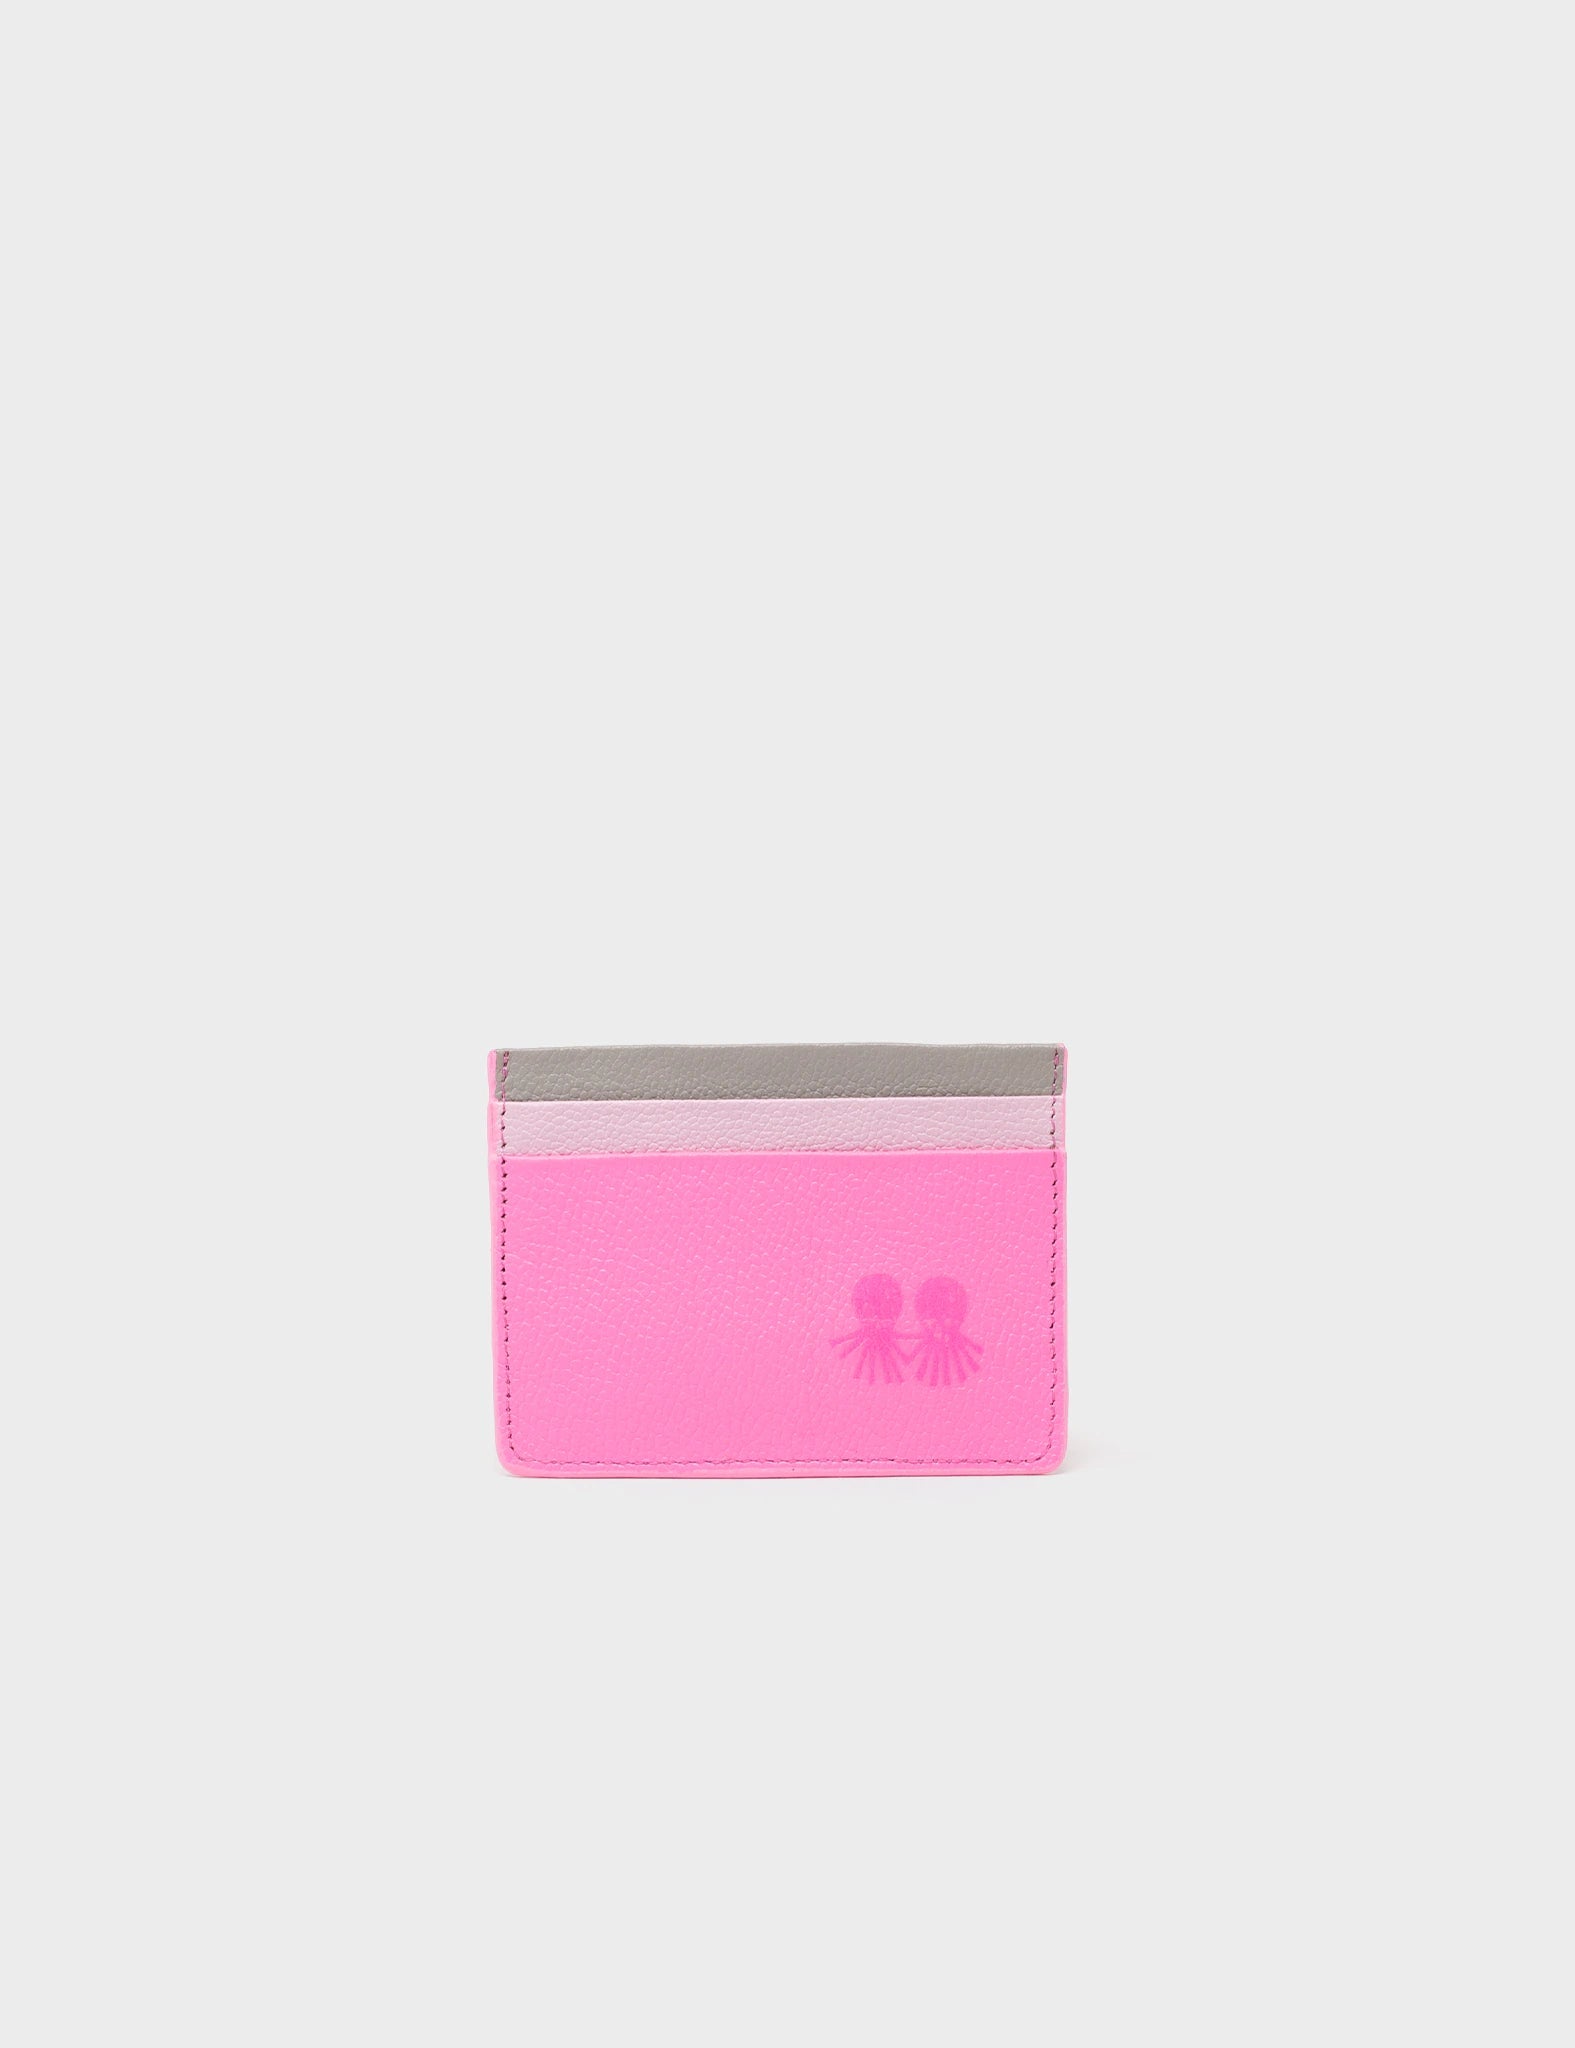 Filium Cardholder - Bubblegum pink, rosa and gray Print - Front view